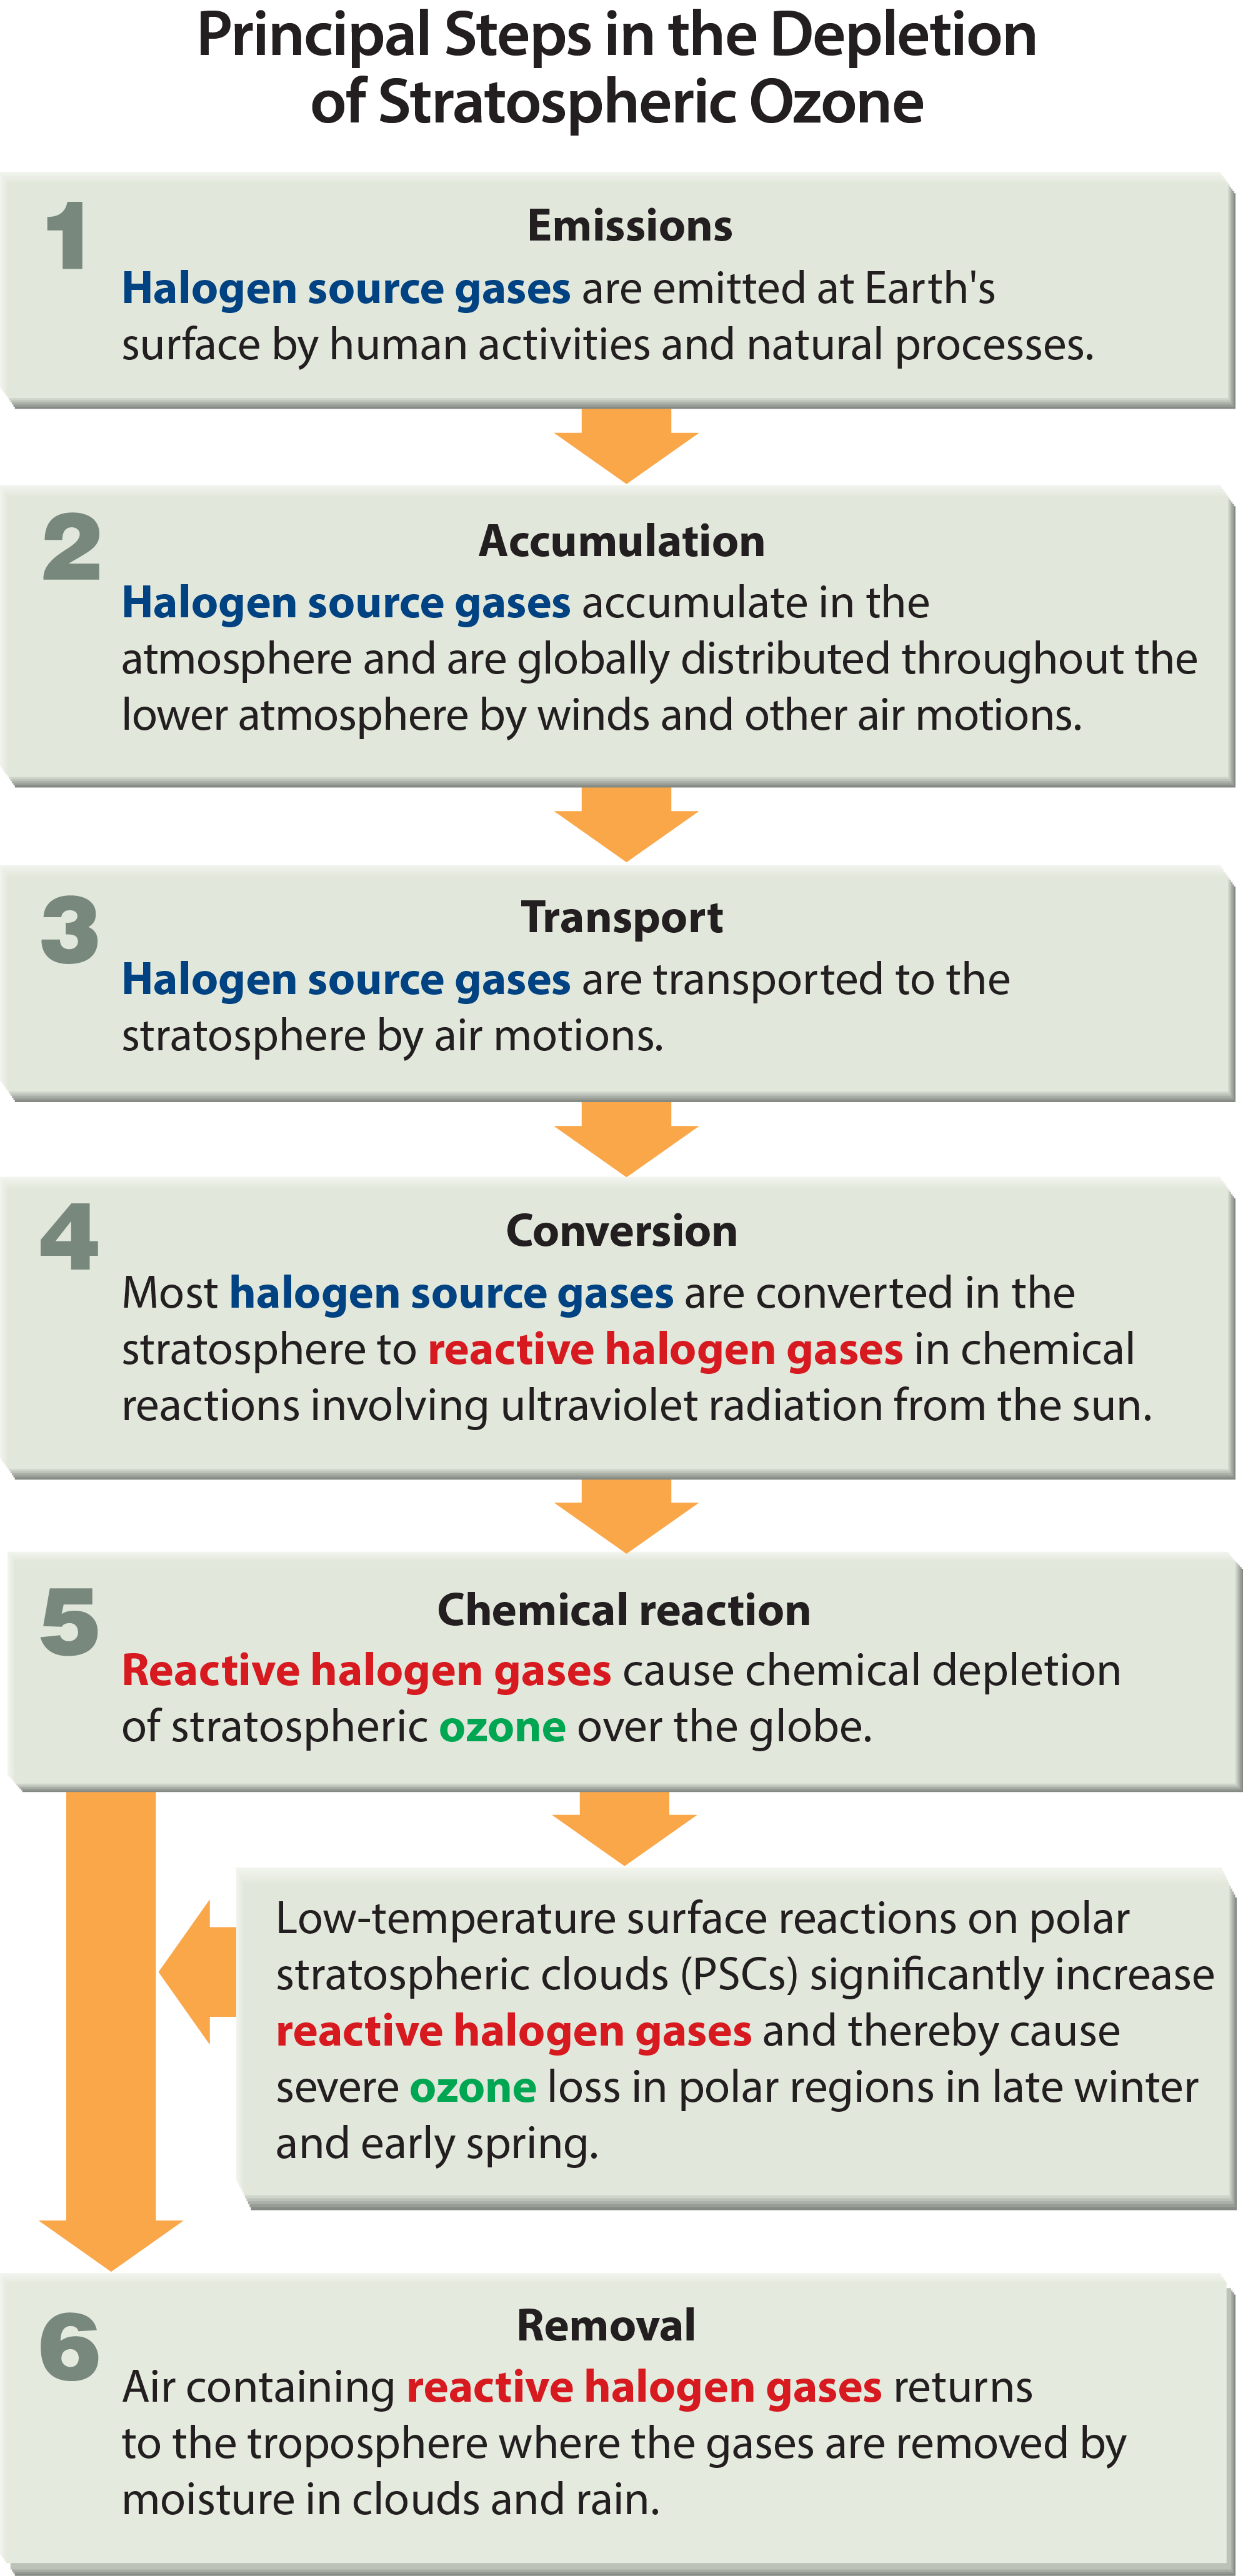 Principal Steps in the Depletion of Stratospheric Ozone